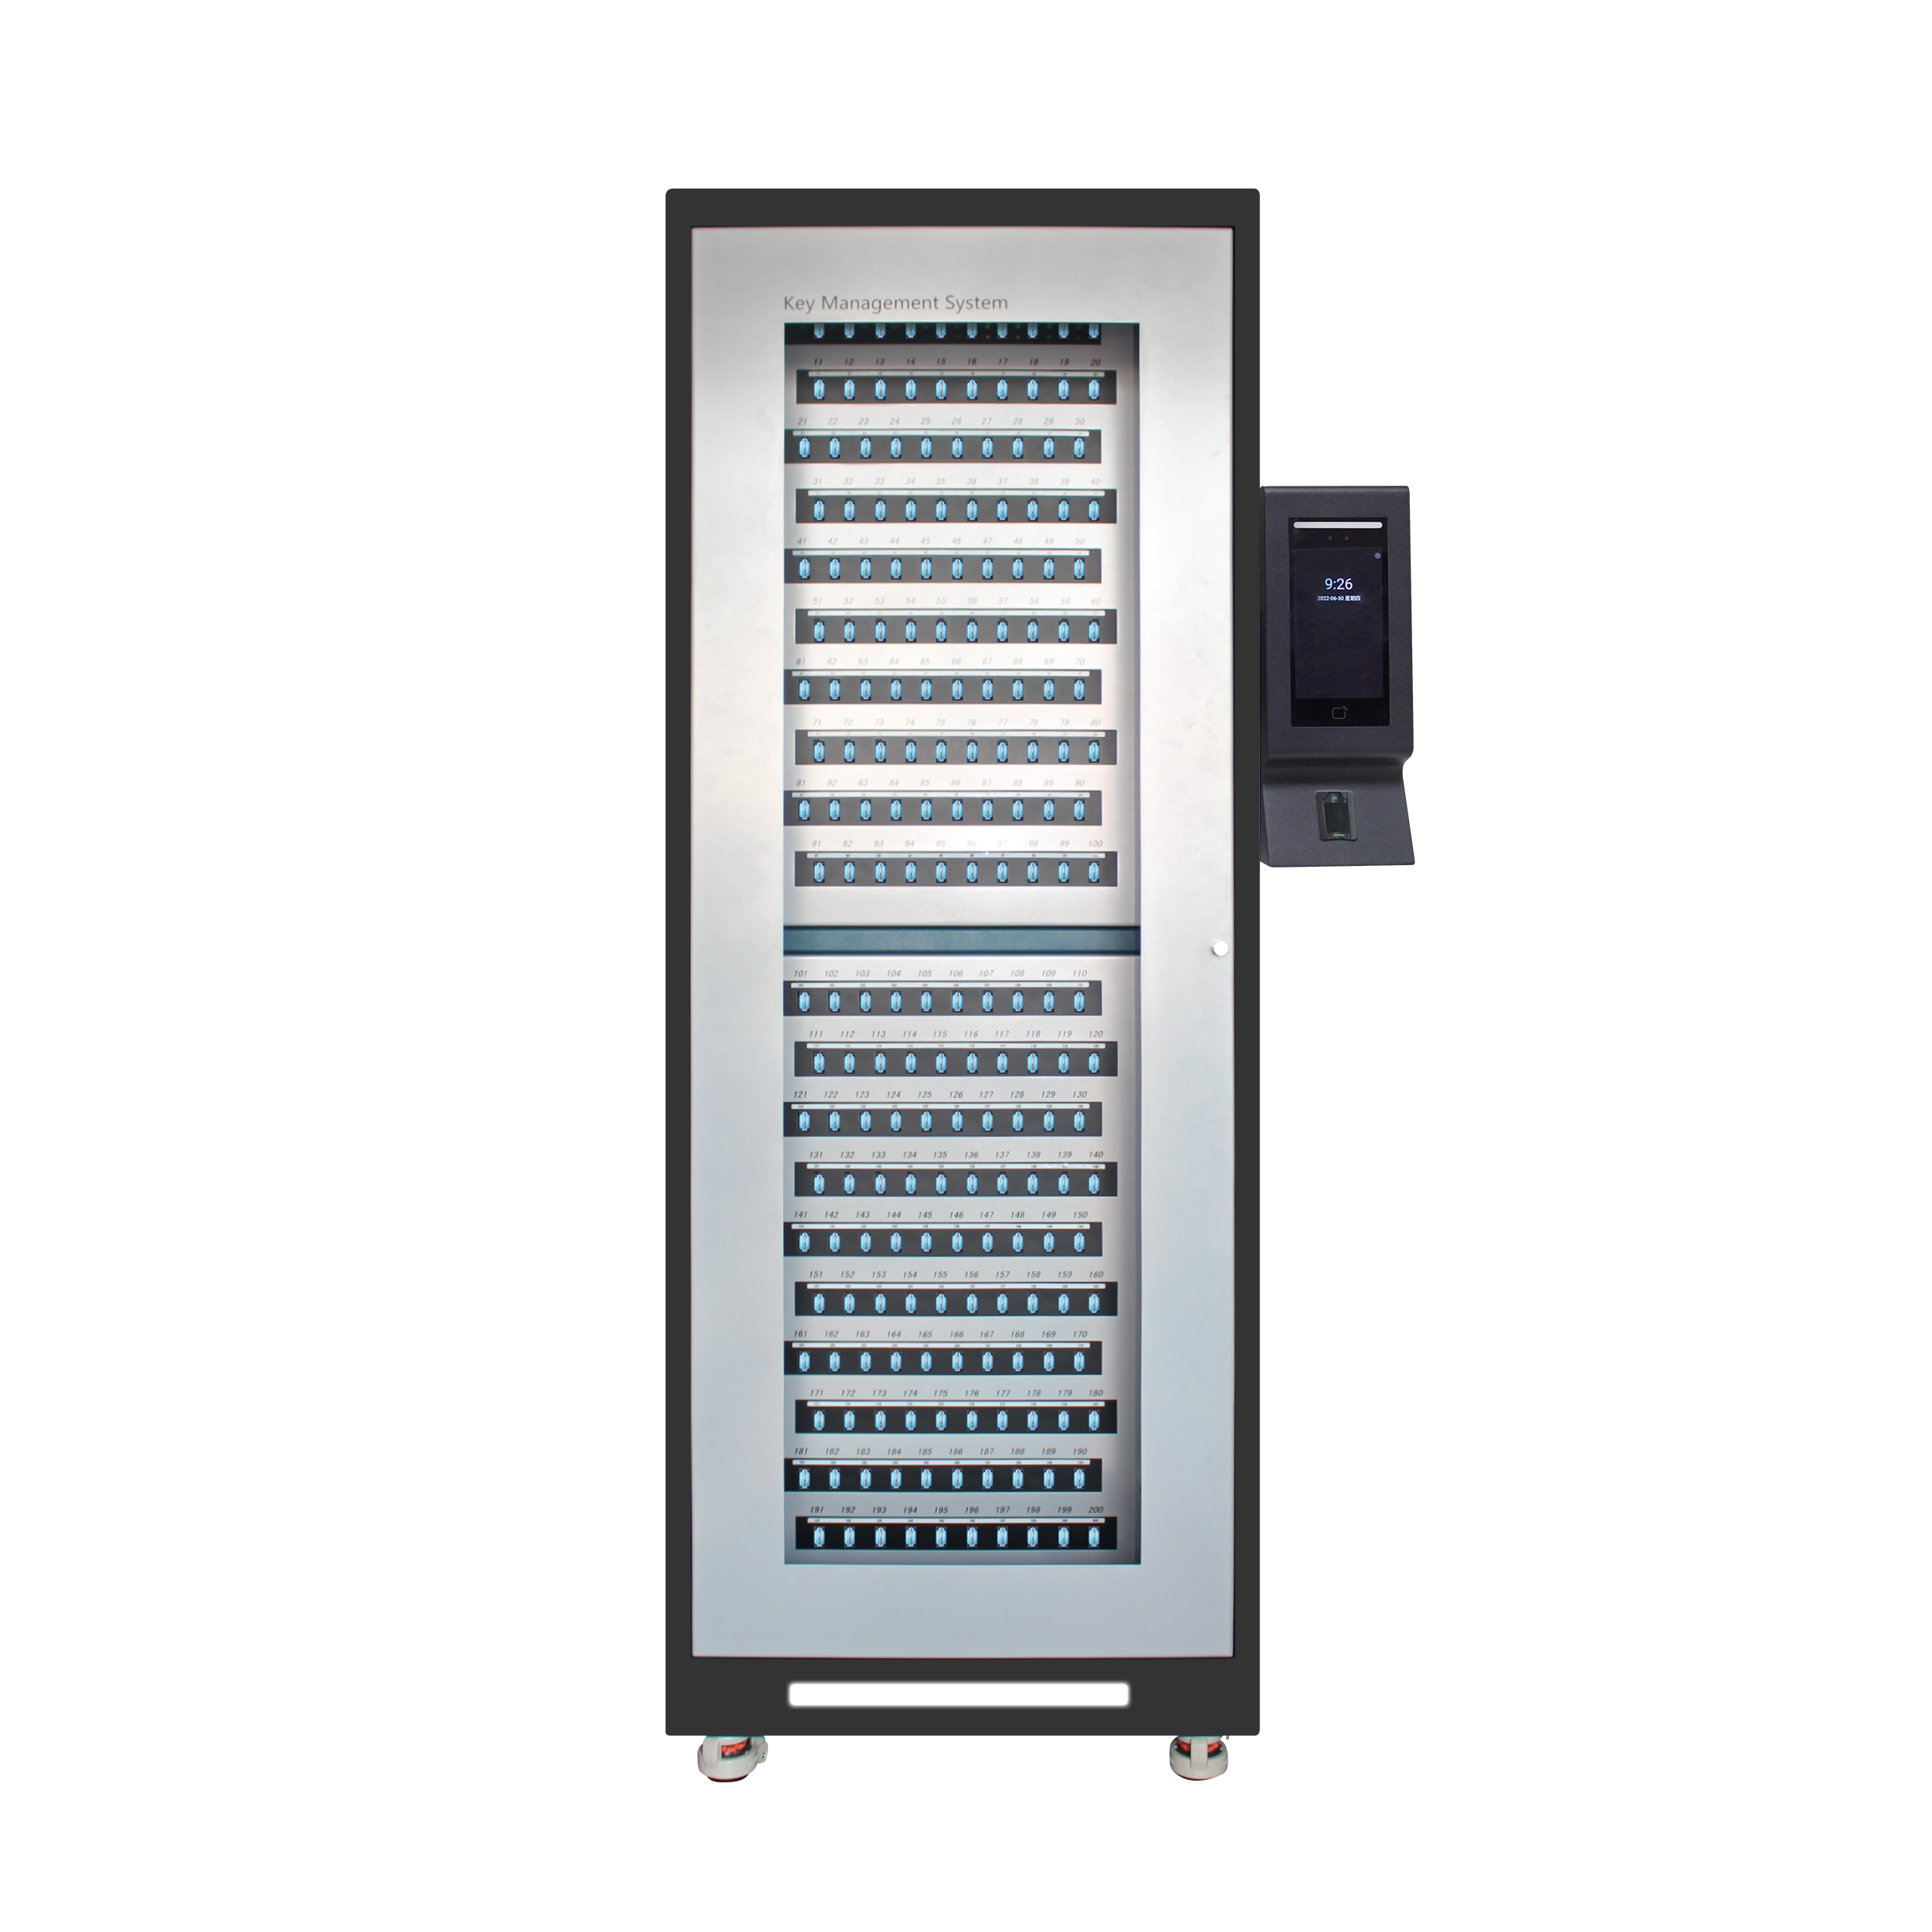 Landwell I-Keybox RFID Intelligent Key Management System RFID Key Cabinet